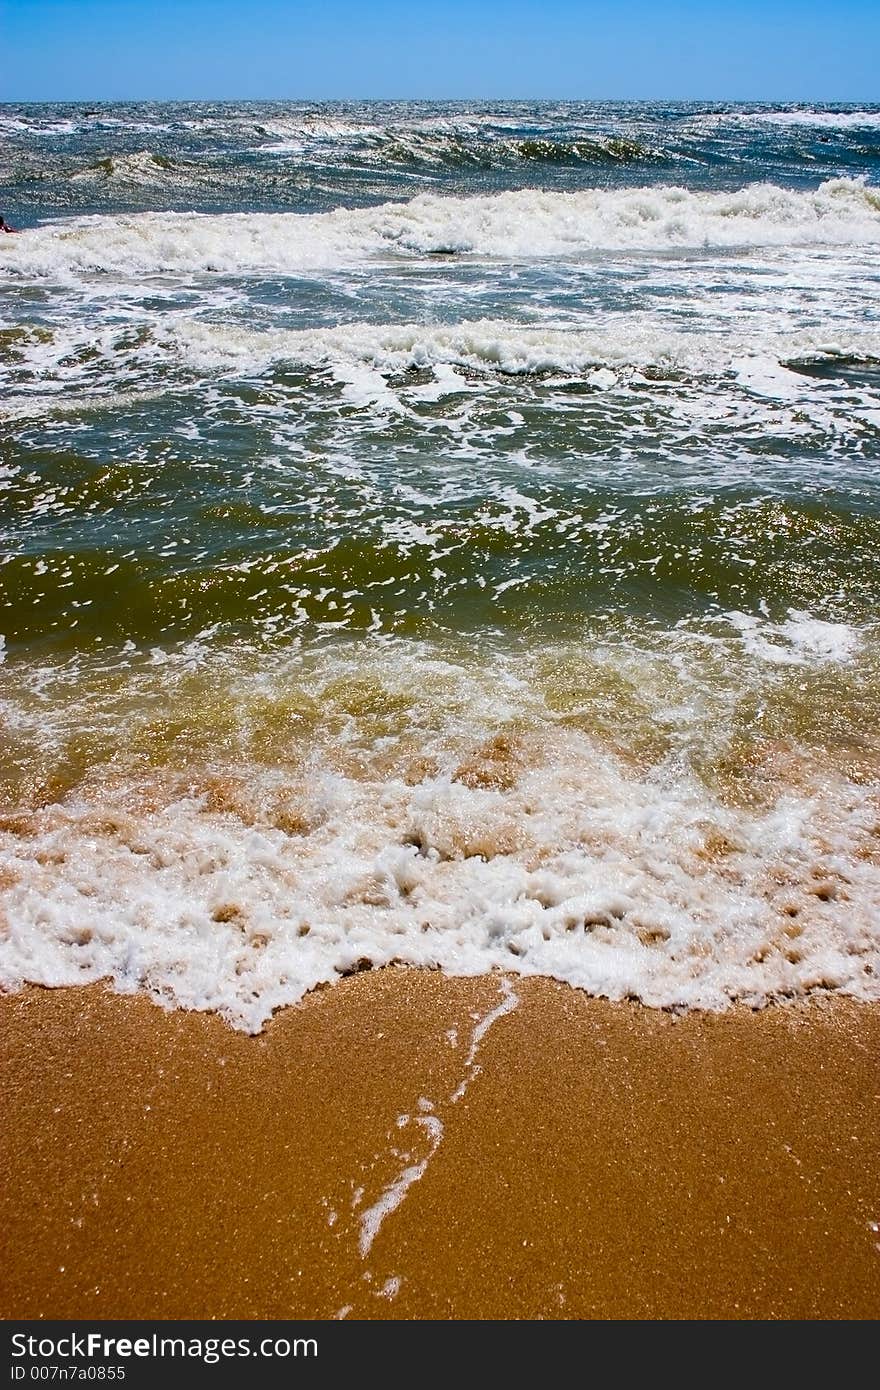 Sea waves on beaches, sands, foam